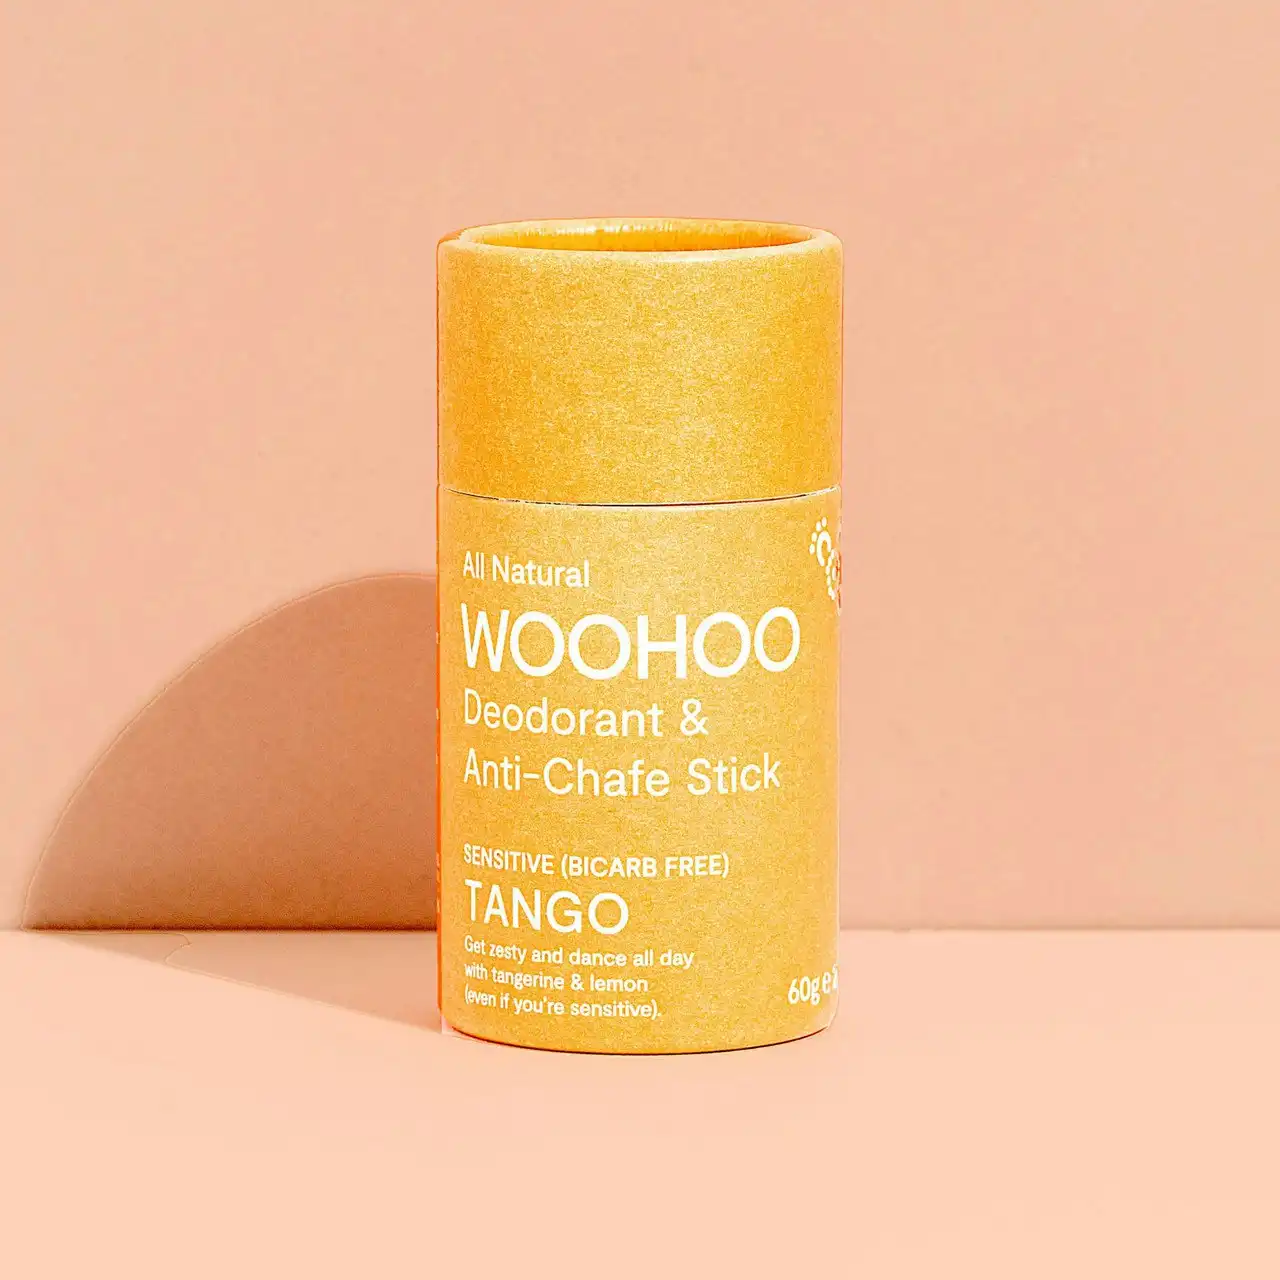 Woohoo Natural Deodorant & Anti-Chafe Stick Tango 60g